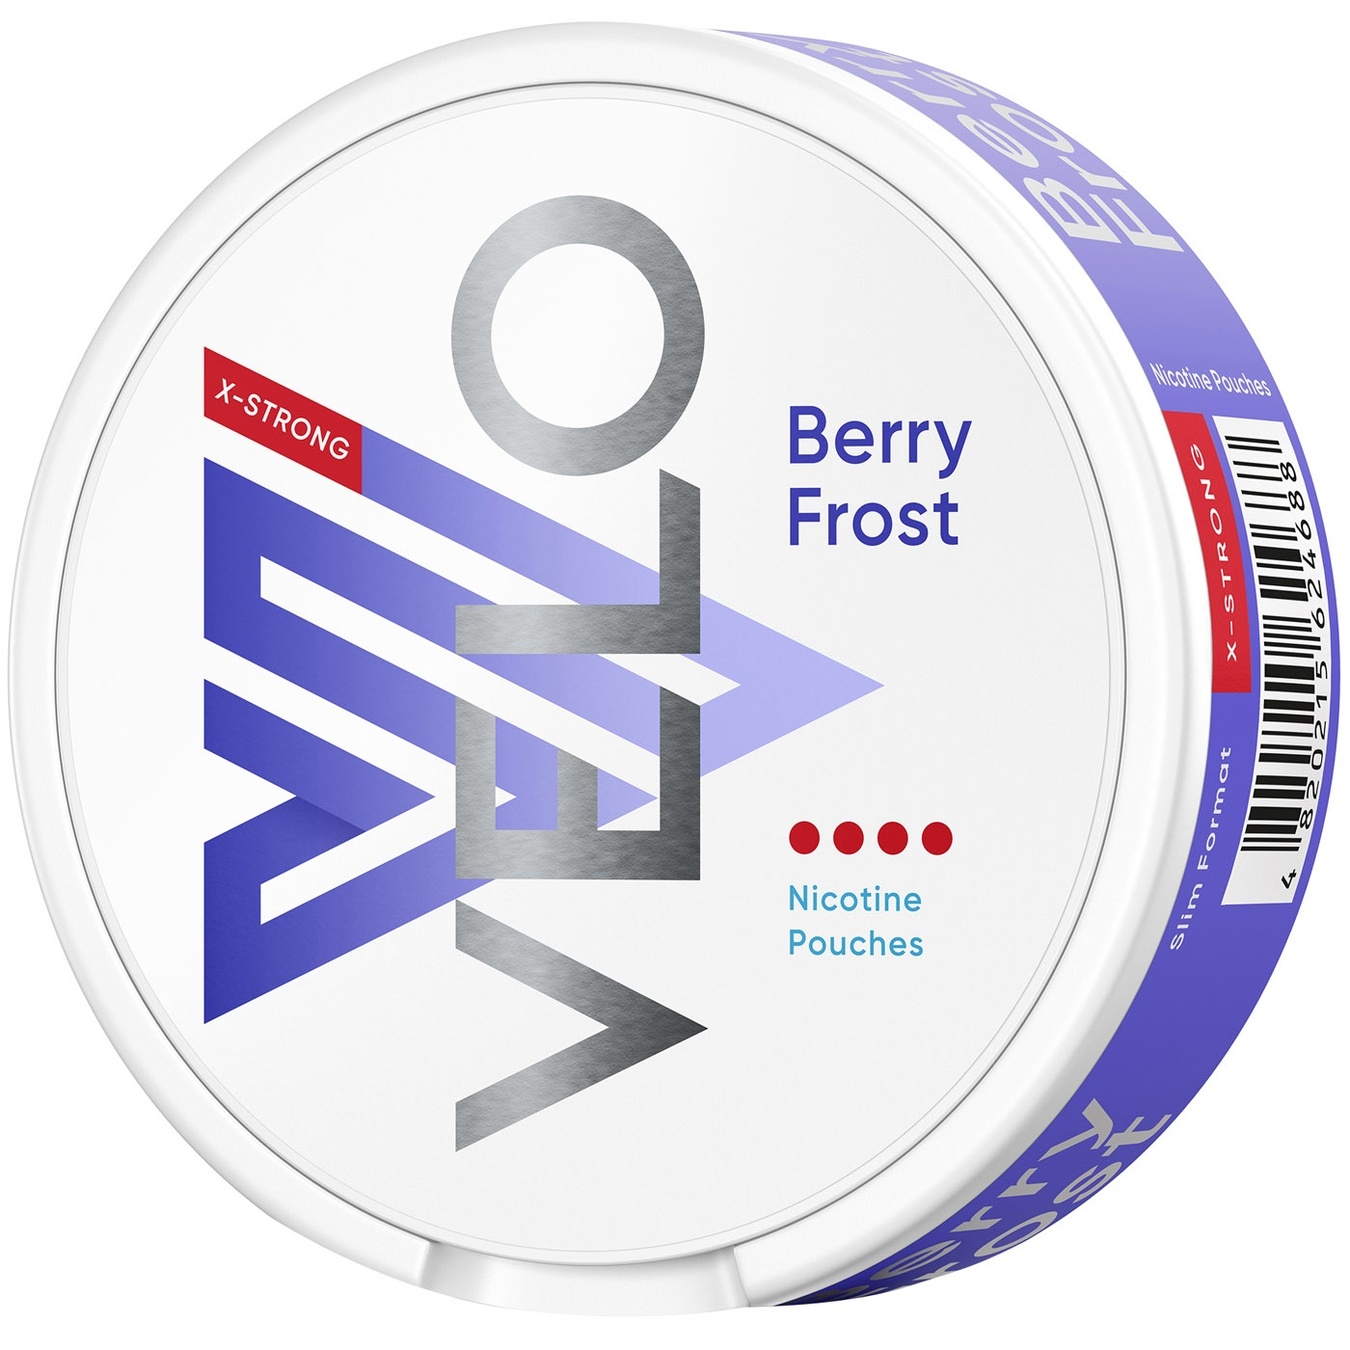 Подушечки Velo Berry Frost X-Strong нікотинові (ціна вказана без акцизу)